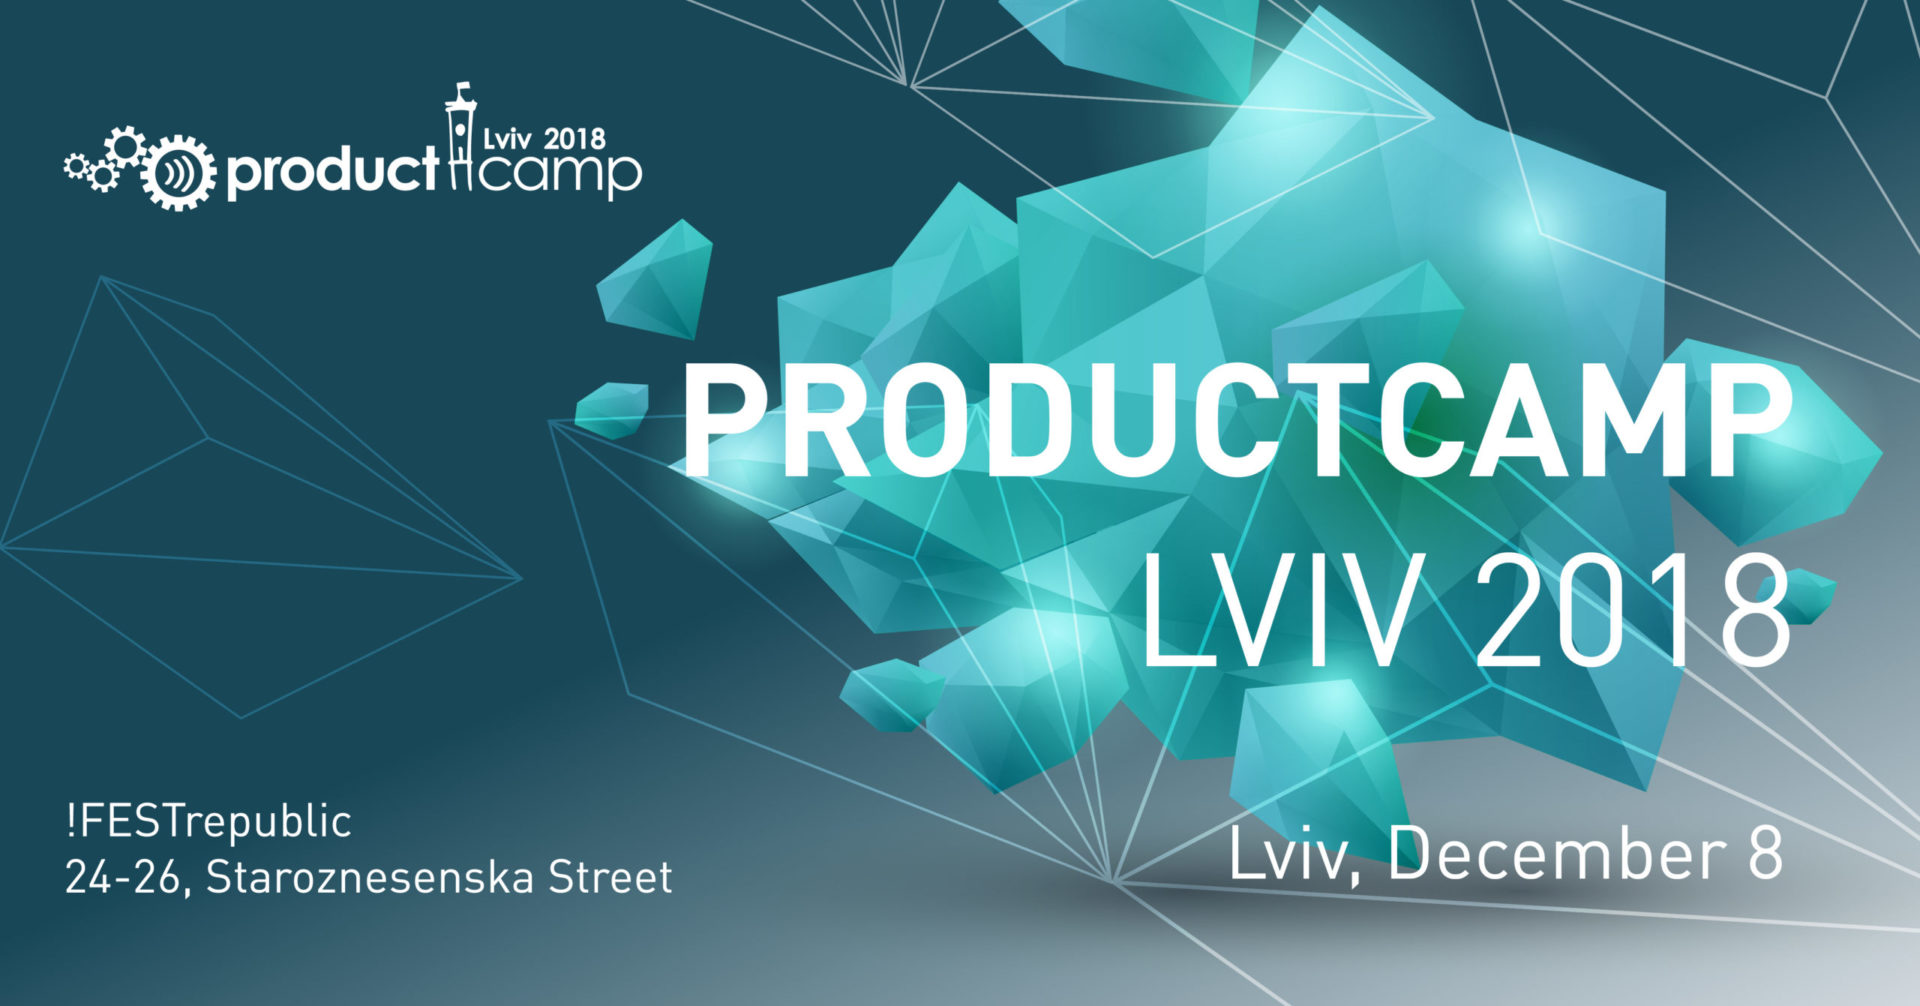 ProductCamp L'viv 2018, 8 December 2018